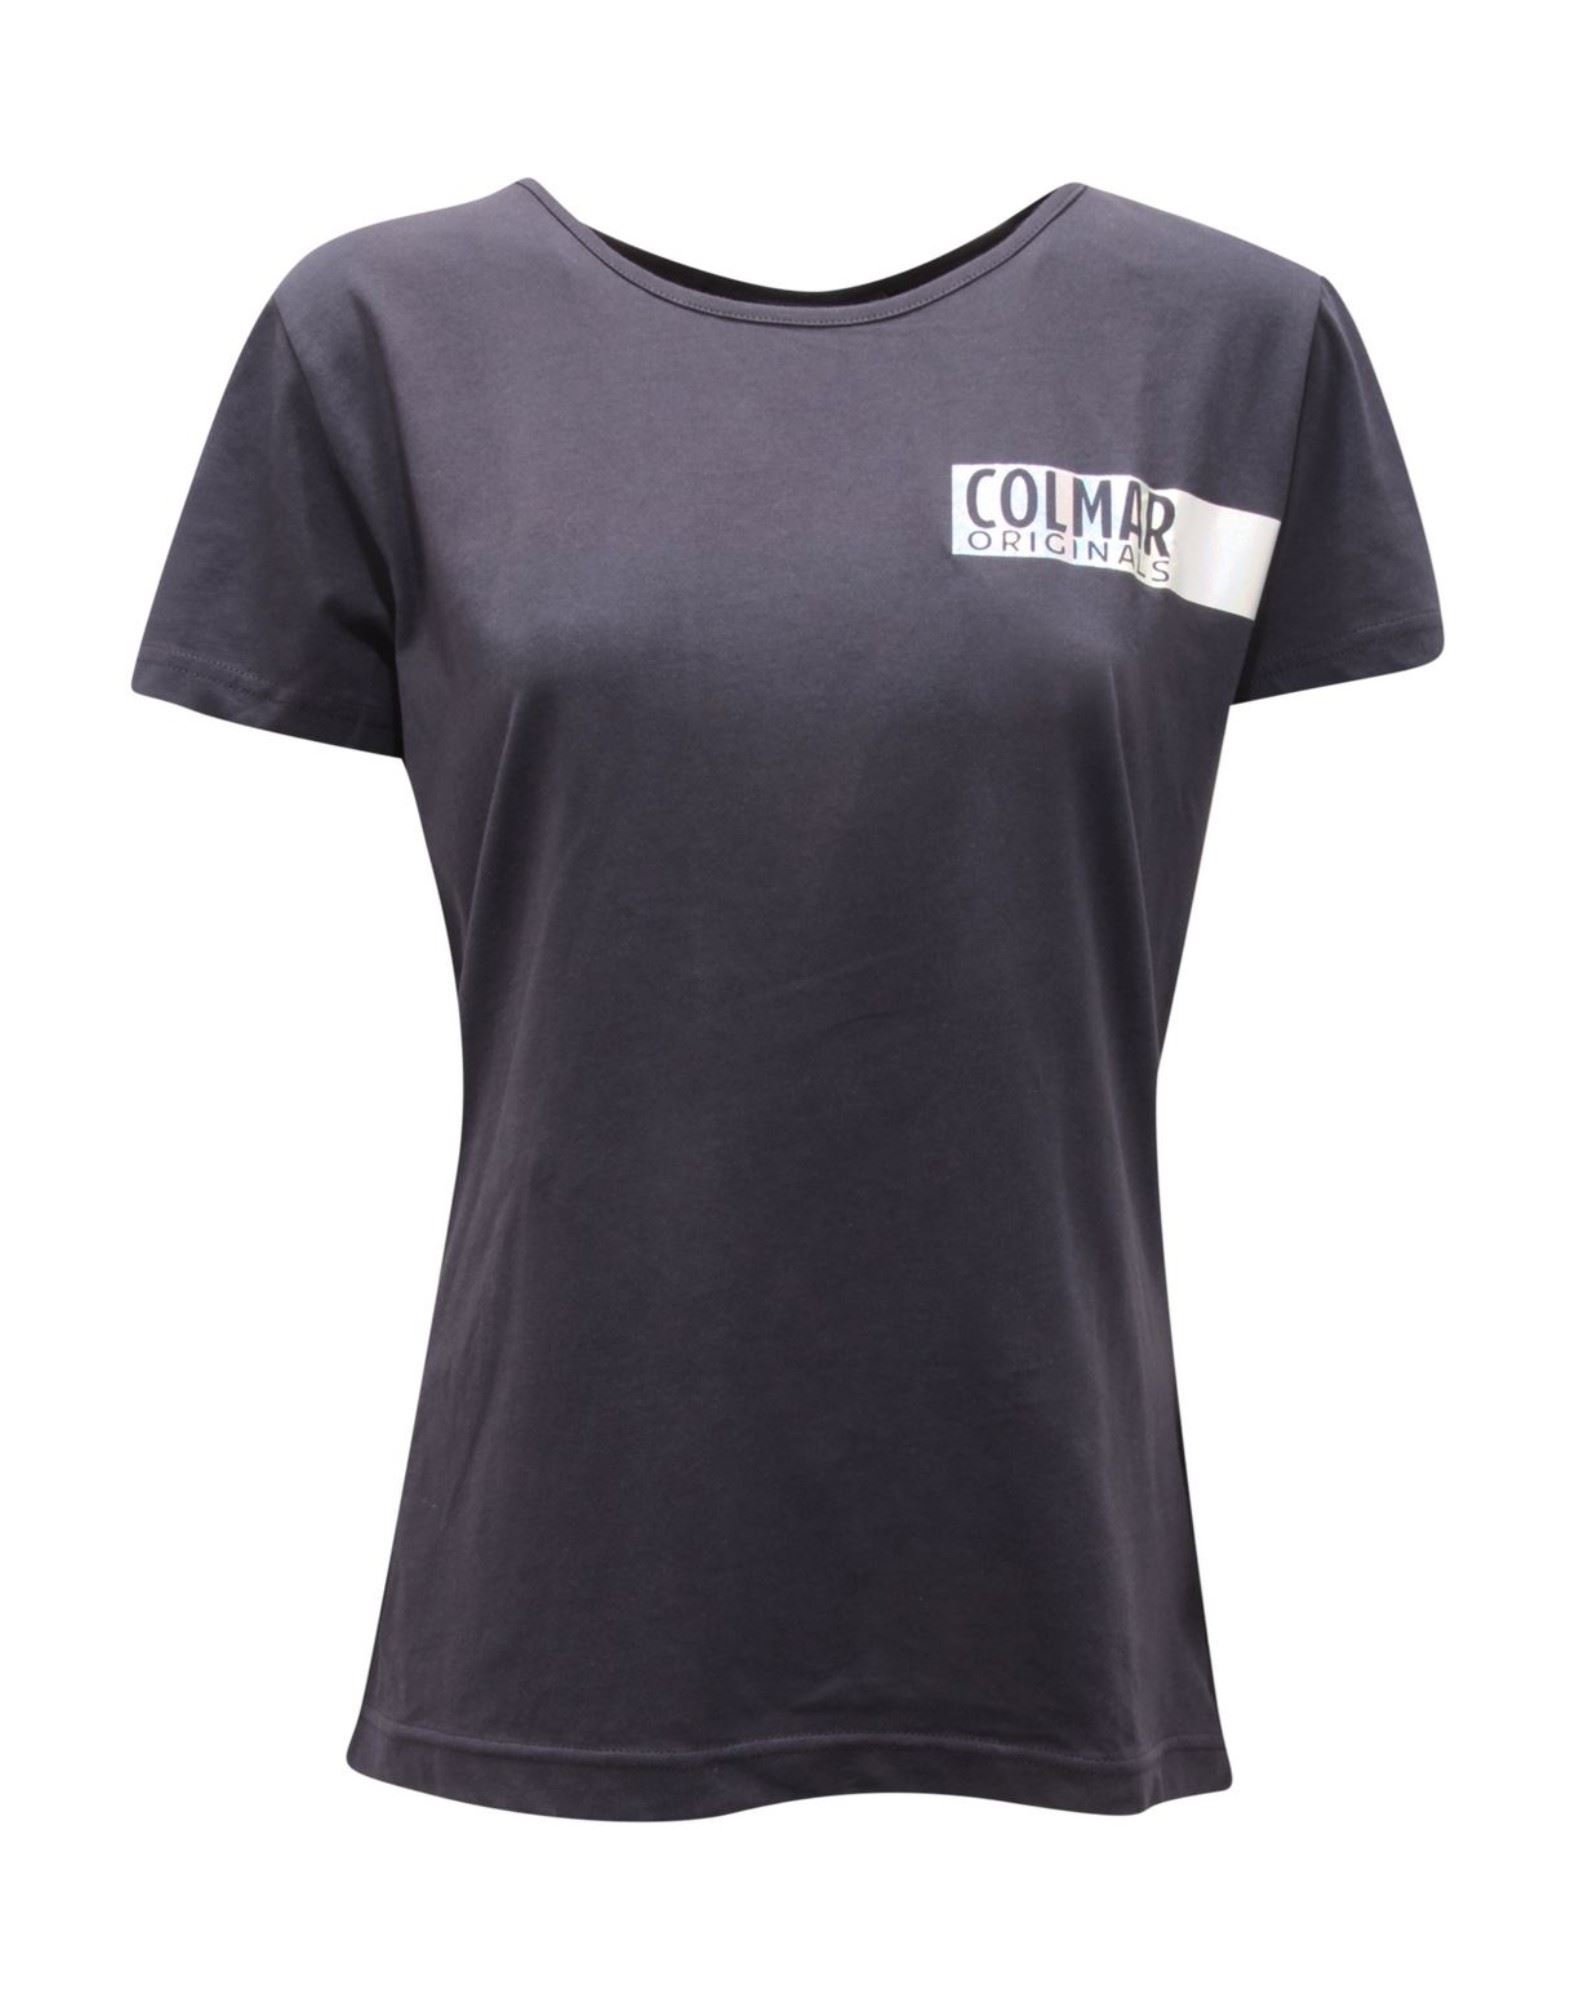 COLMAR T-shirts Damen Blau von COLMAR